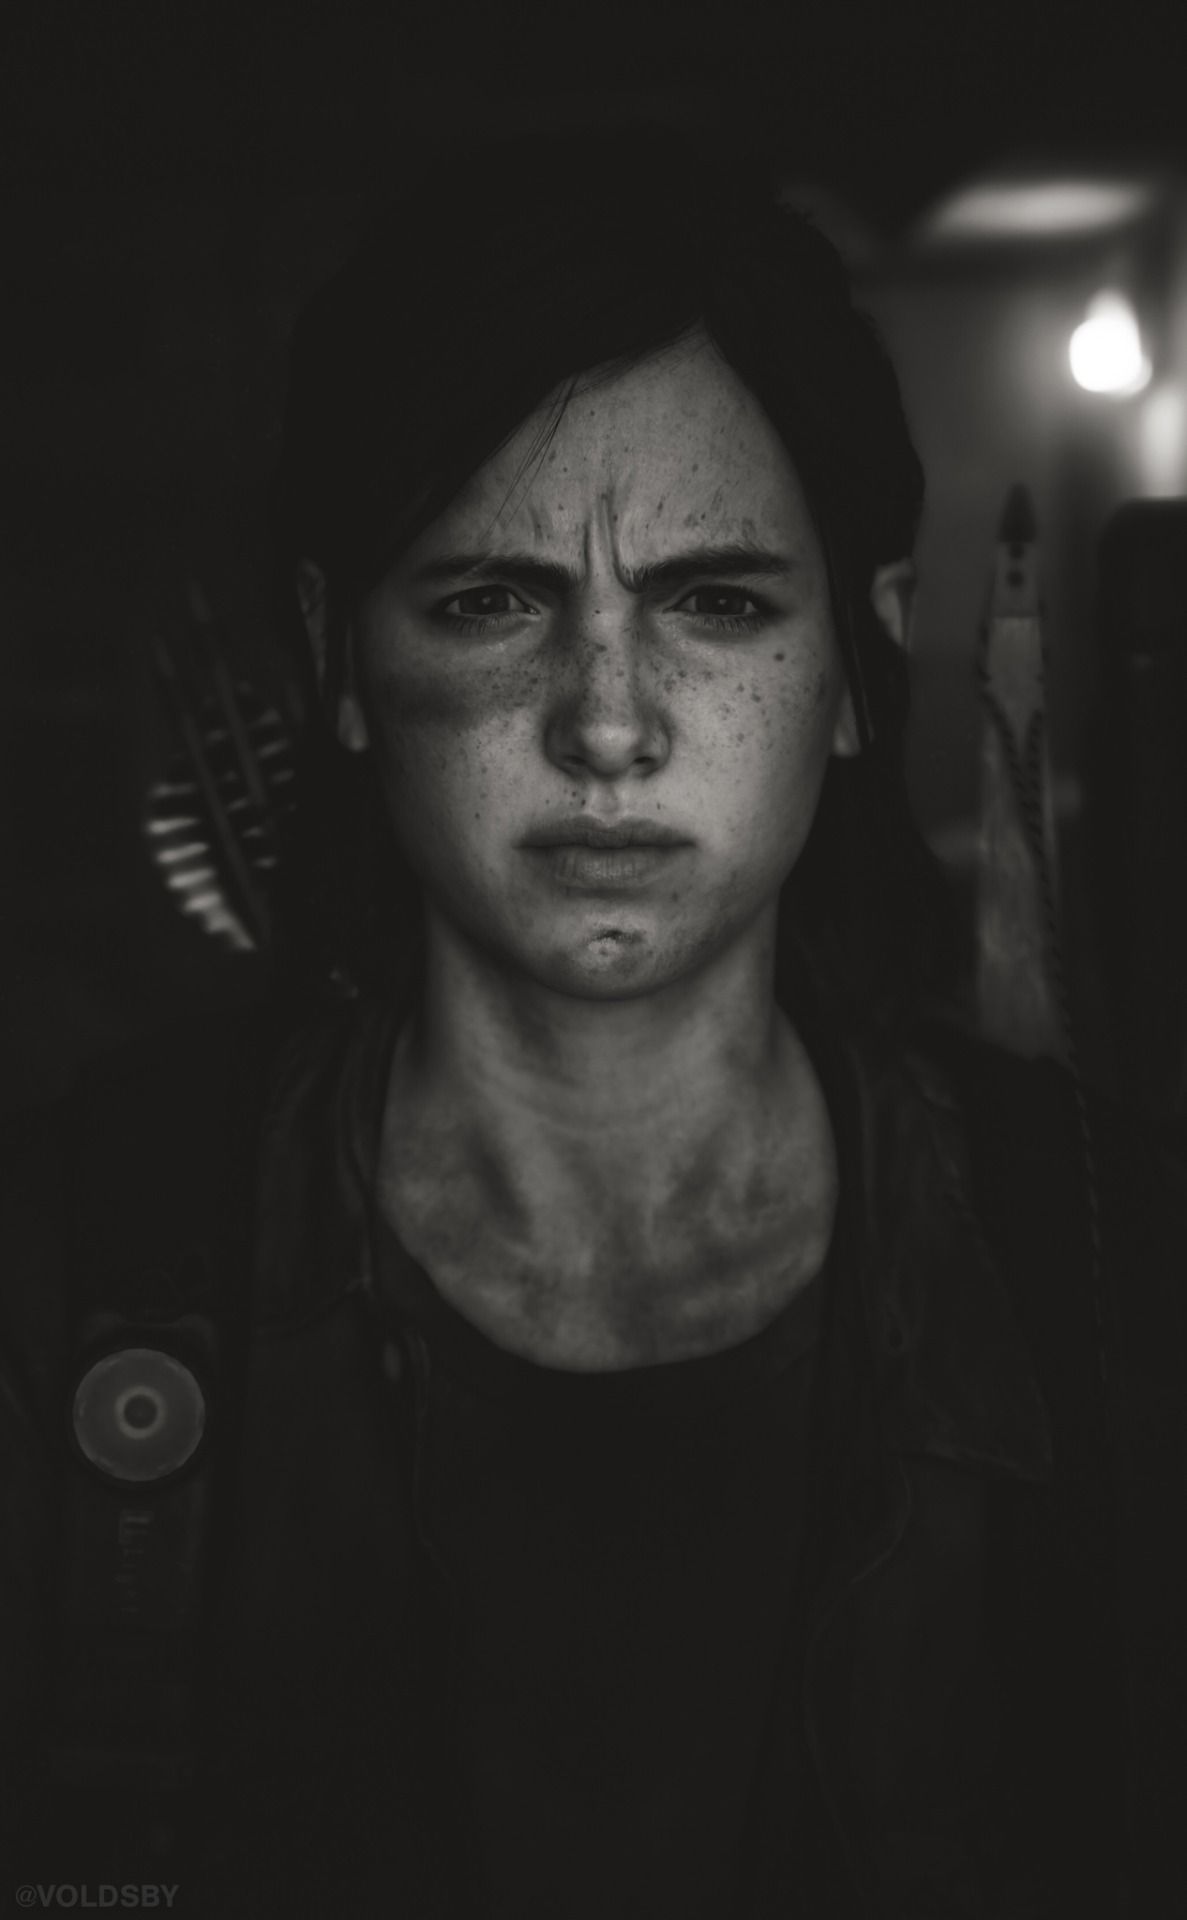 Wallpaper : The Last of Us, Ellie Williams, PlayStation